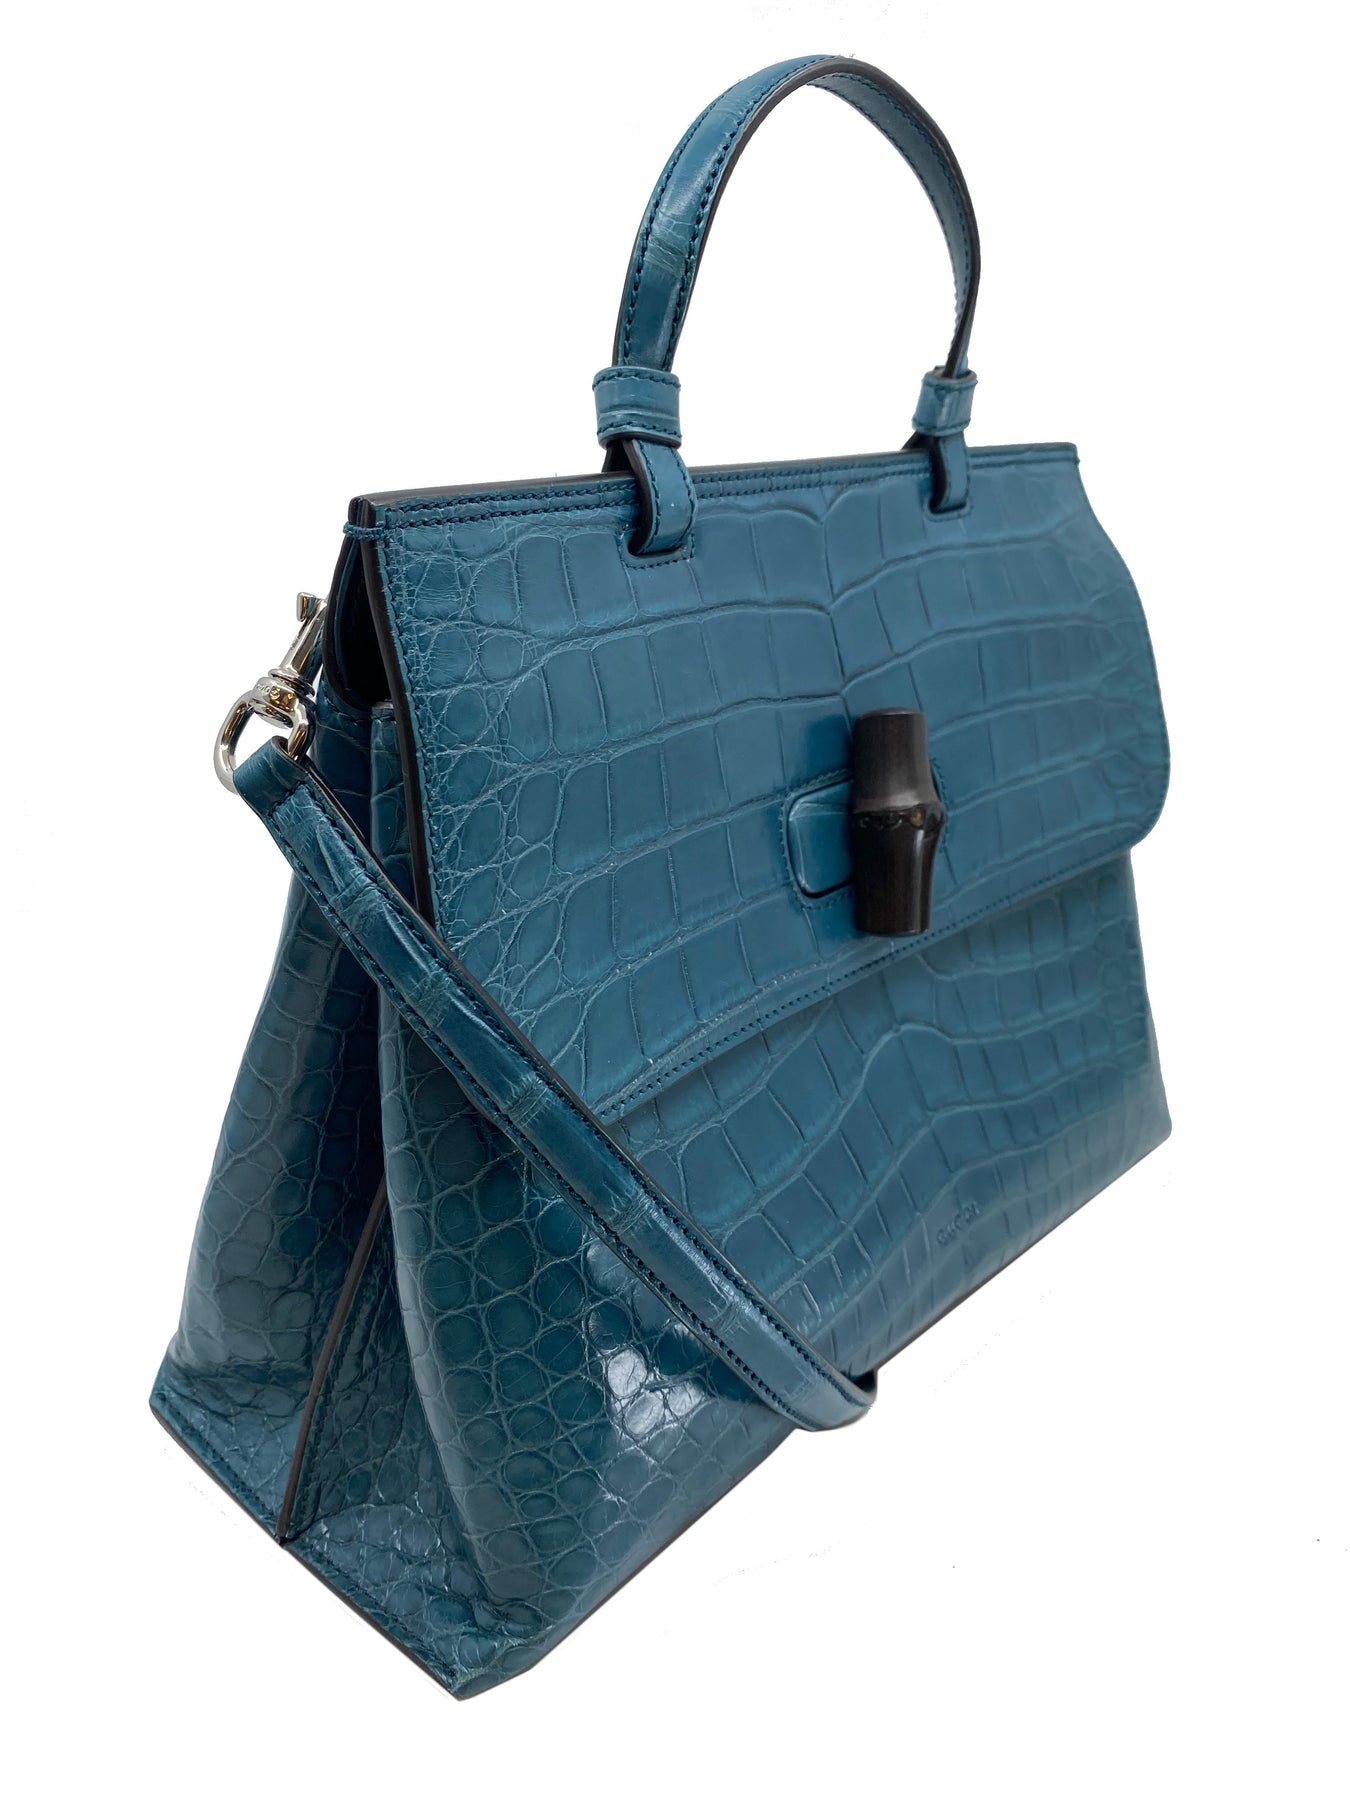 Gucci Bamboo 1947 crocodile top handle bag